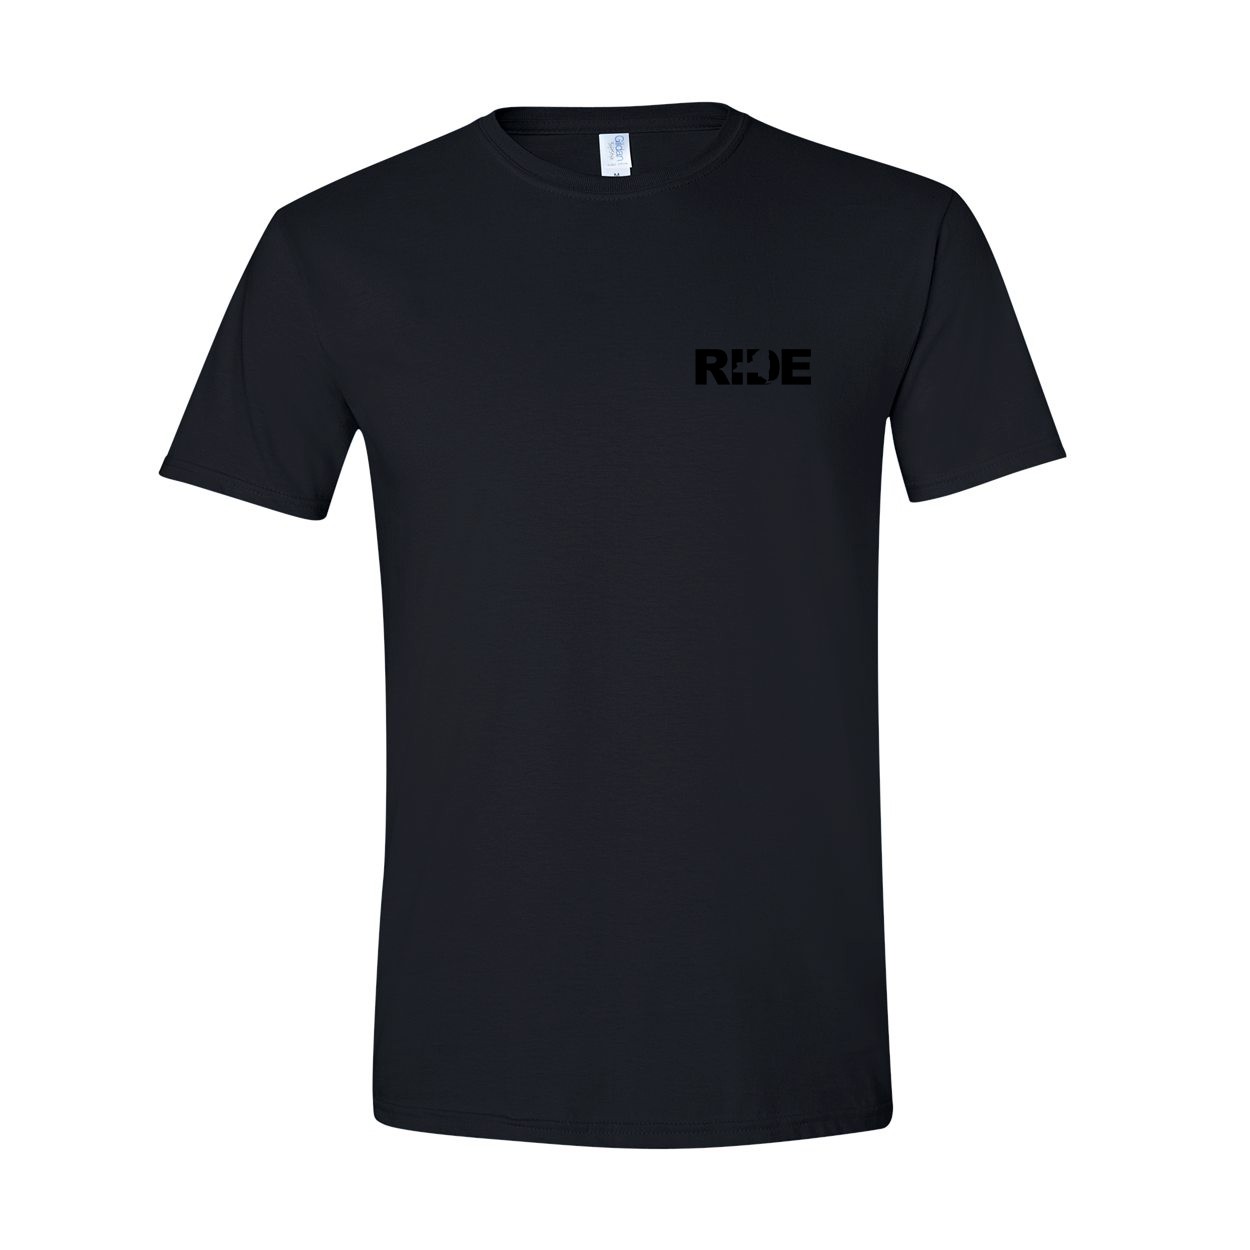 Ride New York Night Out T-Shirt Black (Black Logo)